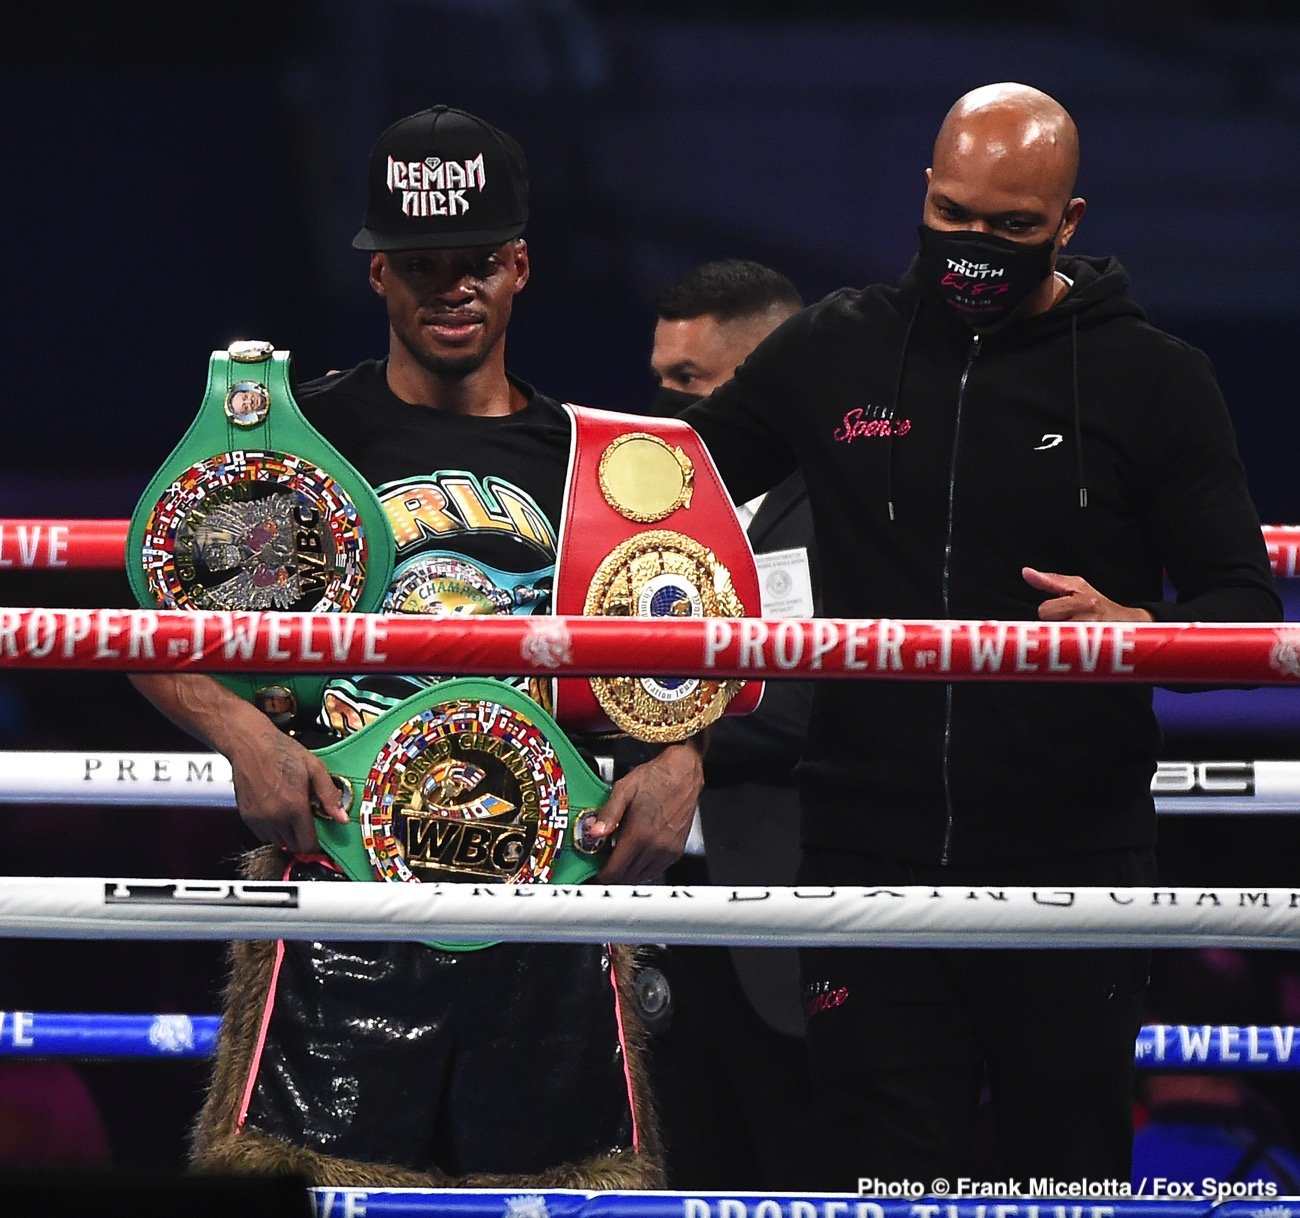 Miguel Flores boxing image / photo